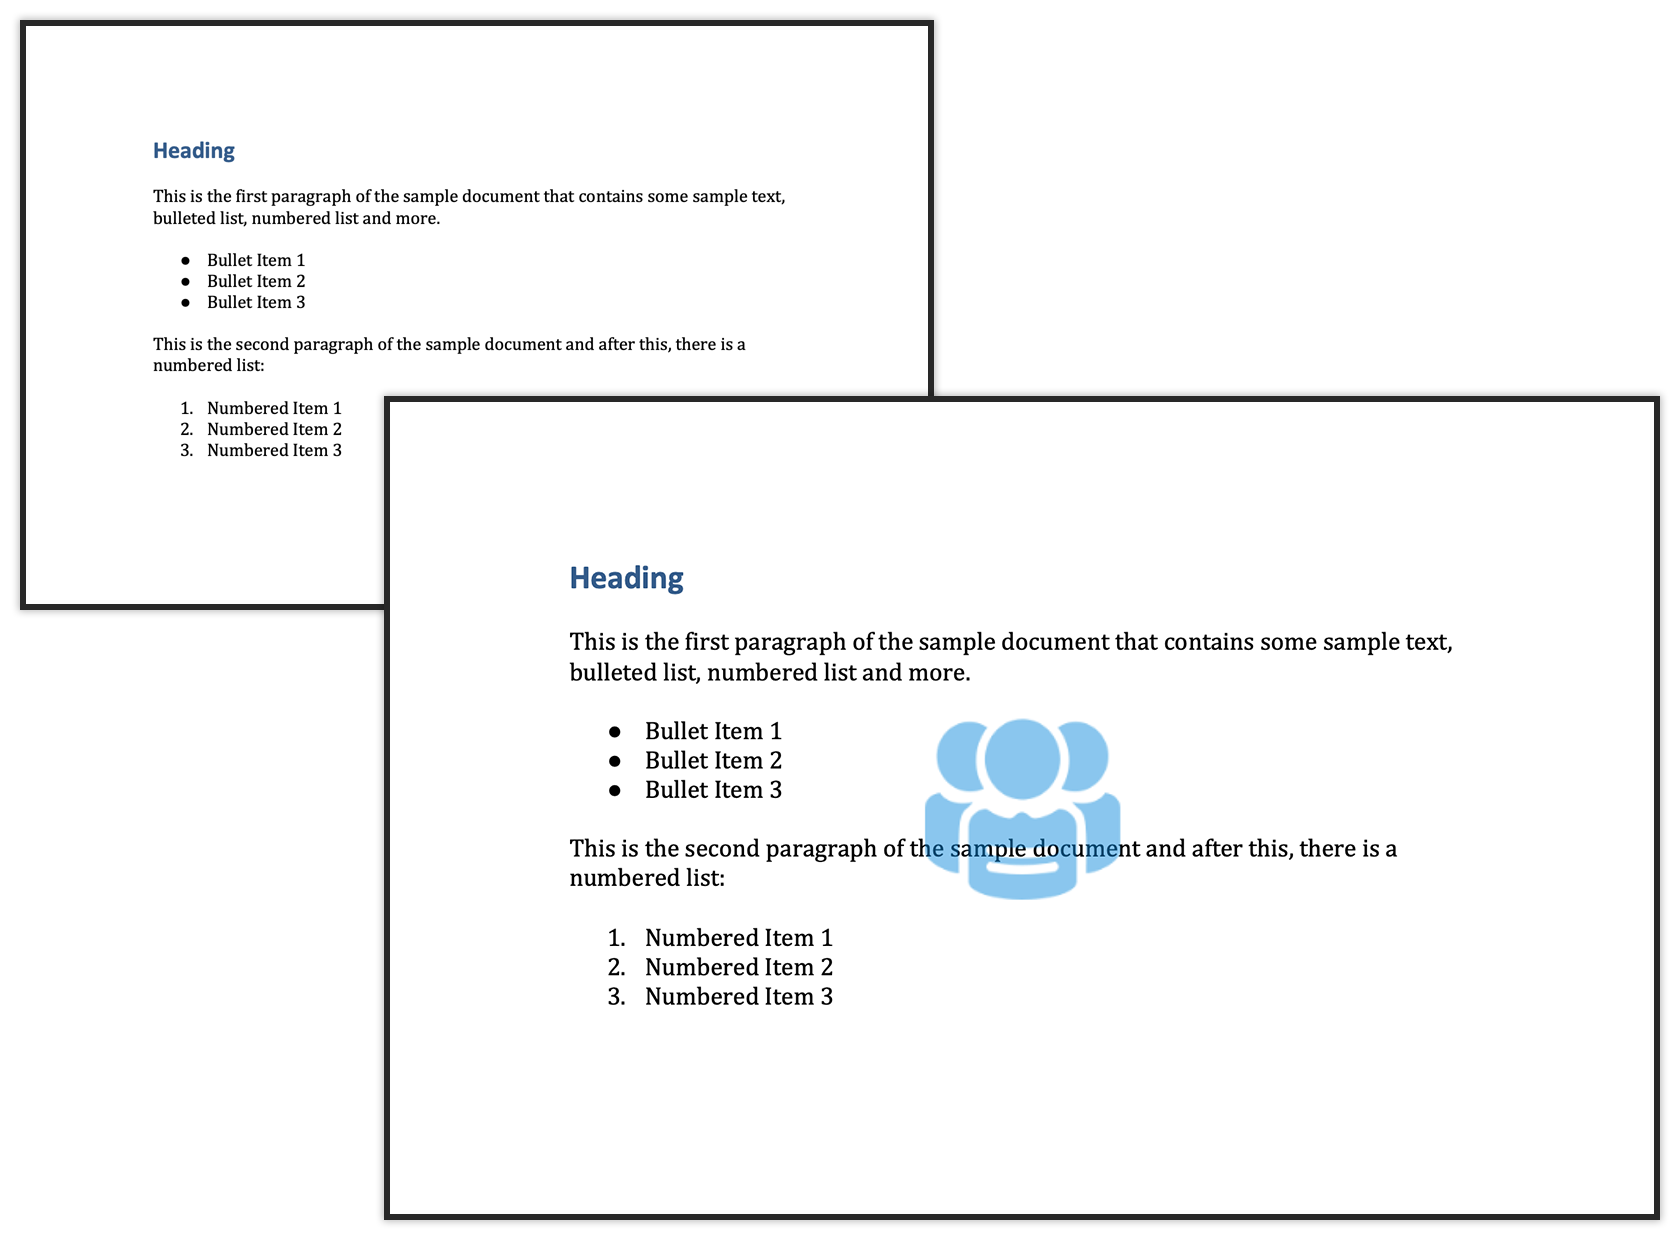 Example of Image Watermark in Word Document using Java